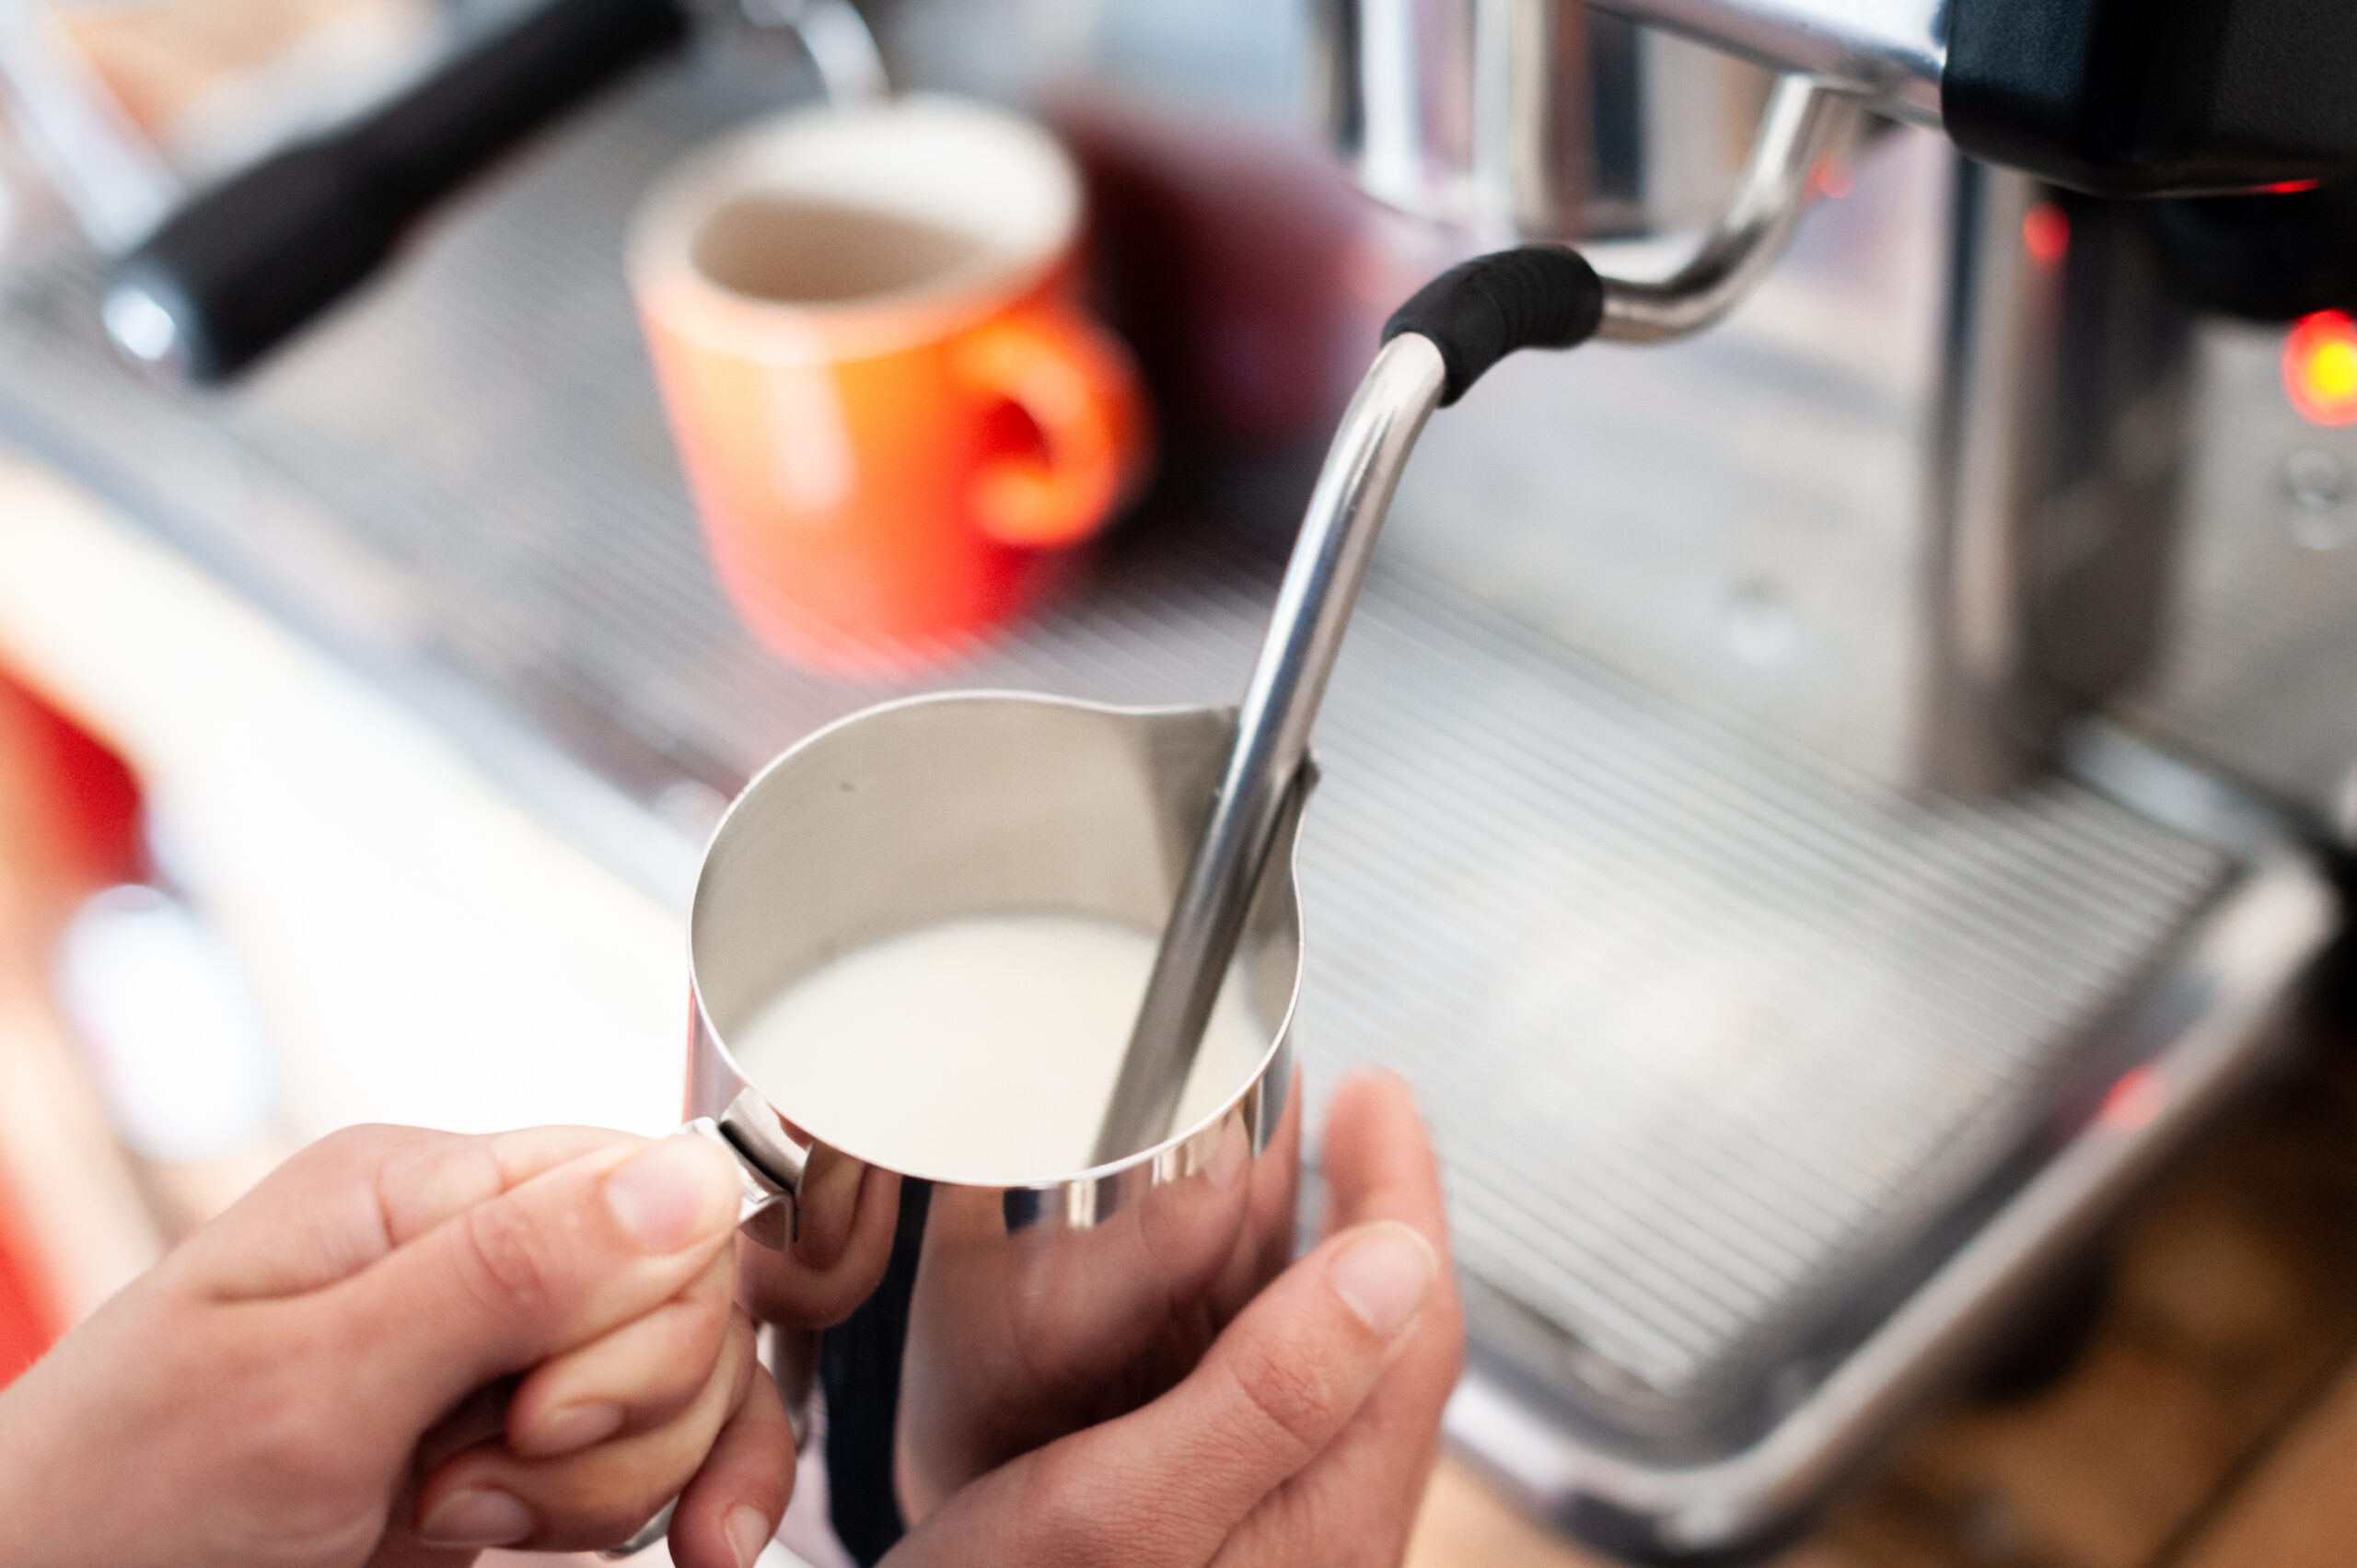 Steaming milk in a metal jug using a steam wand